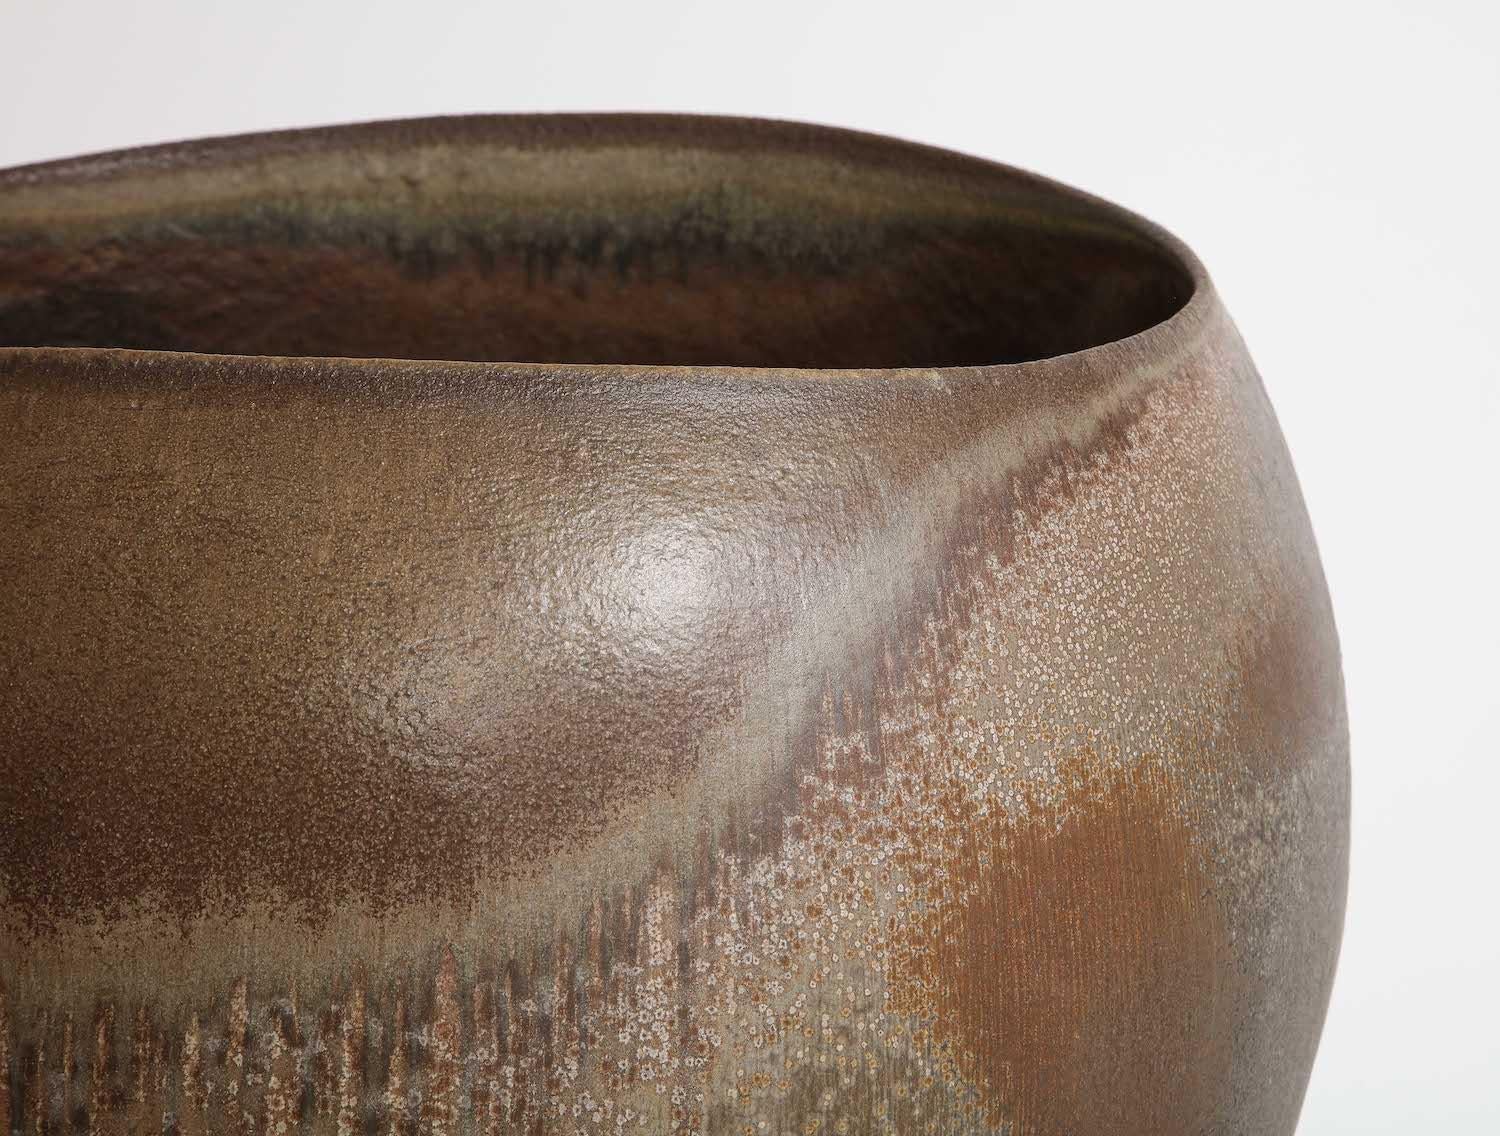 Large-scale footed bowl of irregular form. Glazed stoneware. Wood fired. Signed on underside.